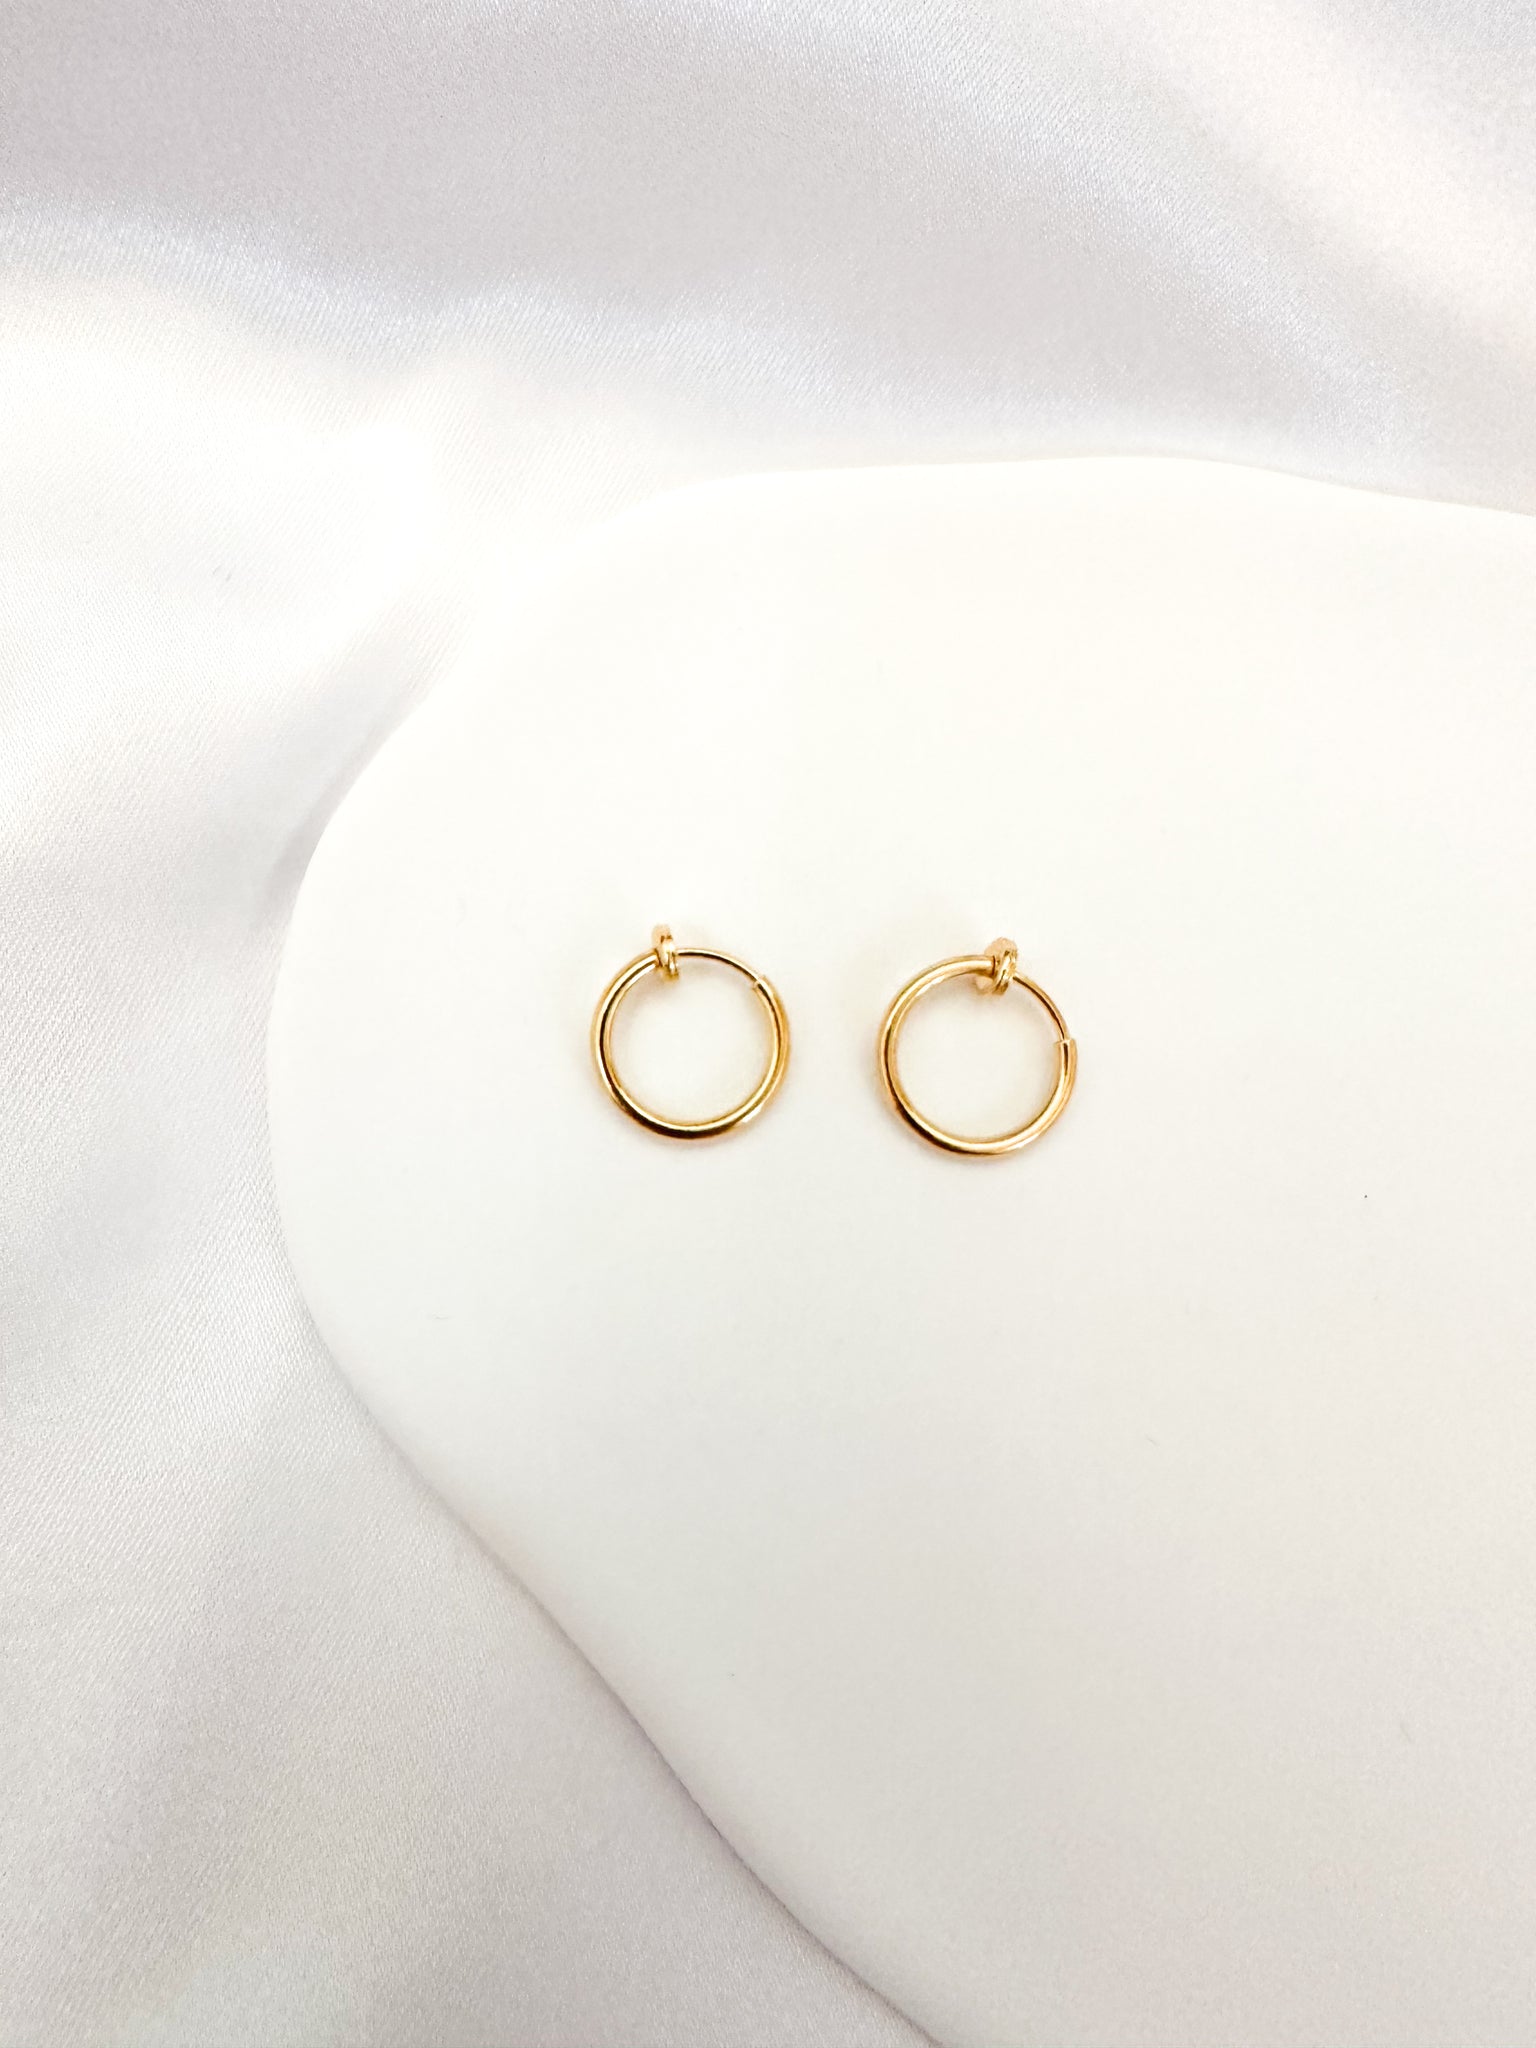 13mm dainty gold clipon hoop earrings